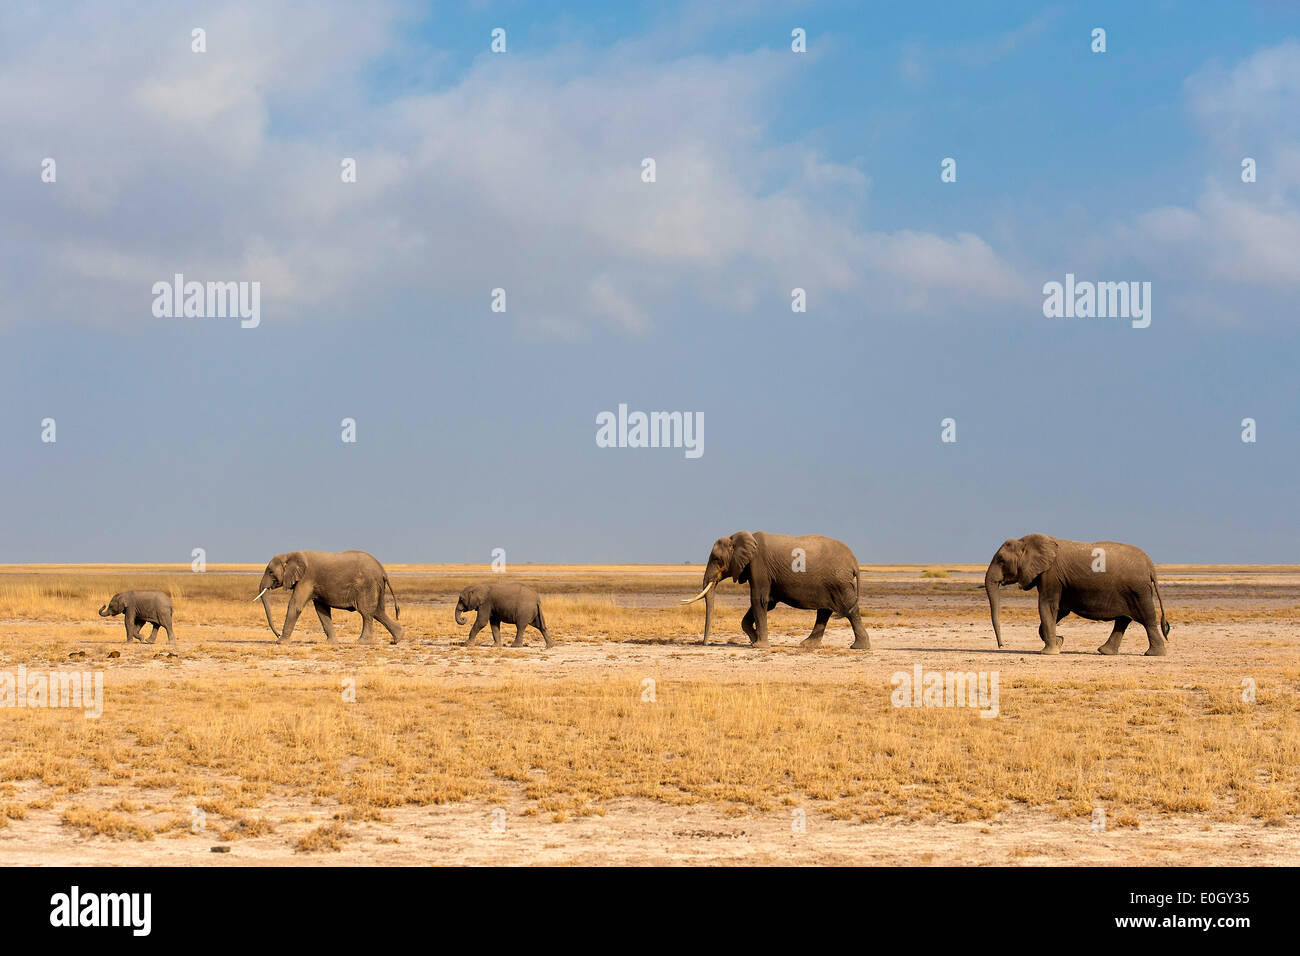 African elephants in Amboseli Nationwide park, Kenya., African elephants in Amboseli National Park Stock Photo